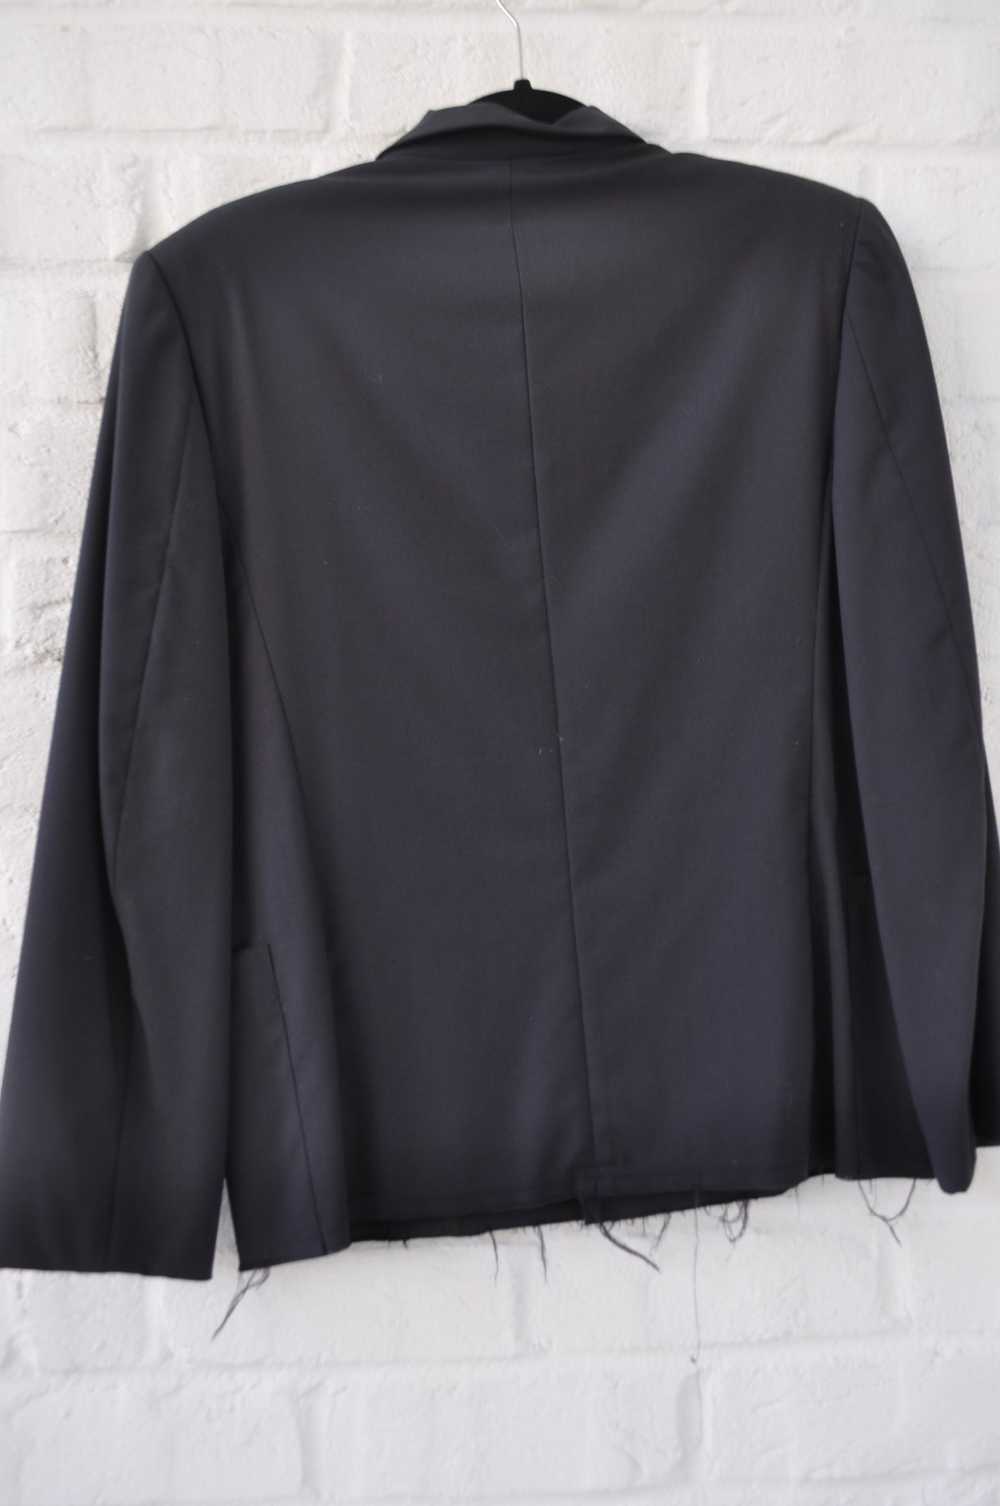 Comme des Garçons apron dress and jacket from 89 - image 5